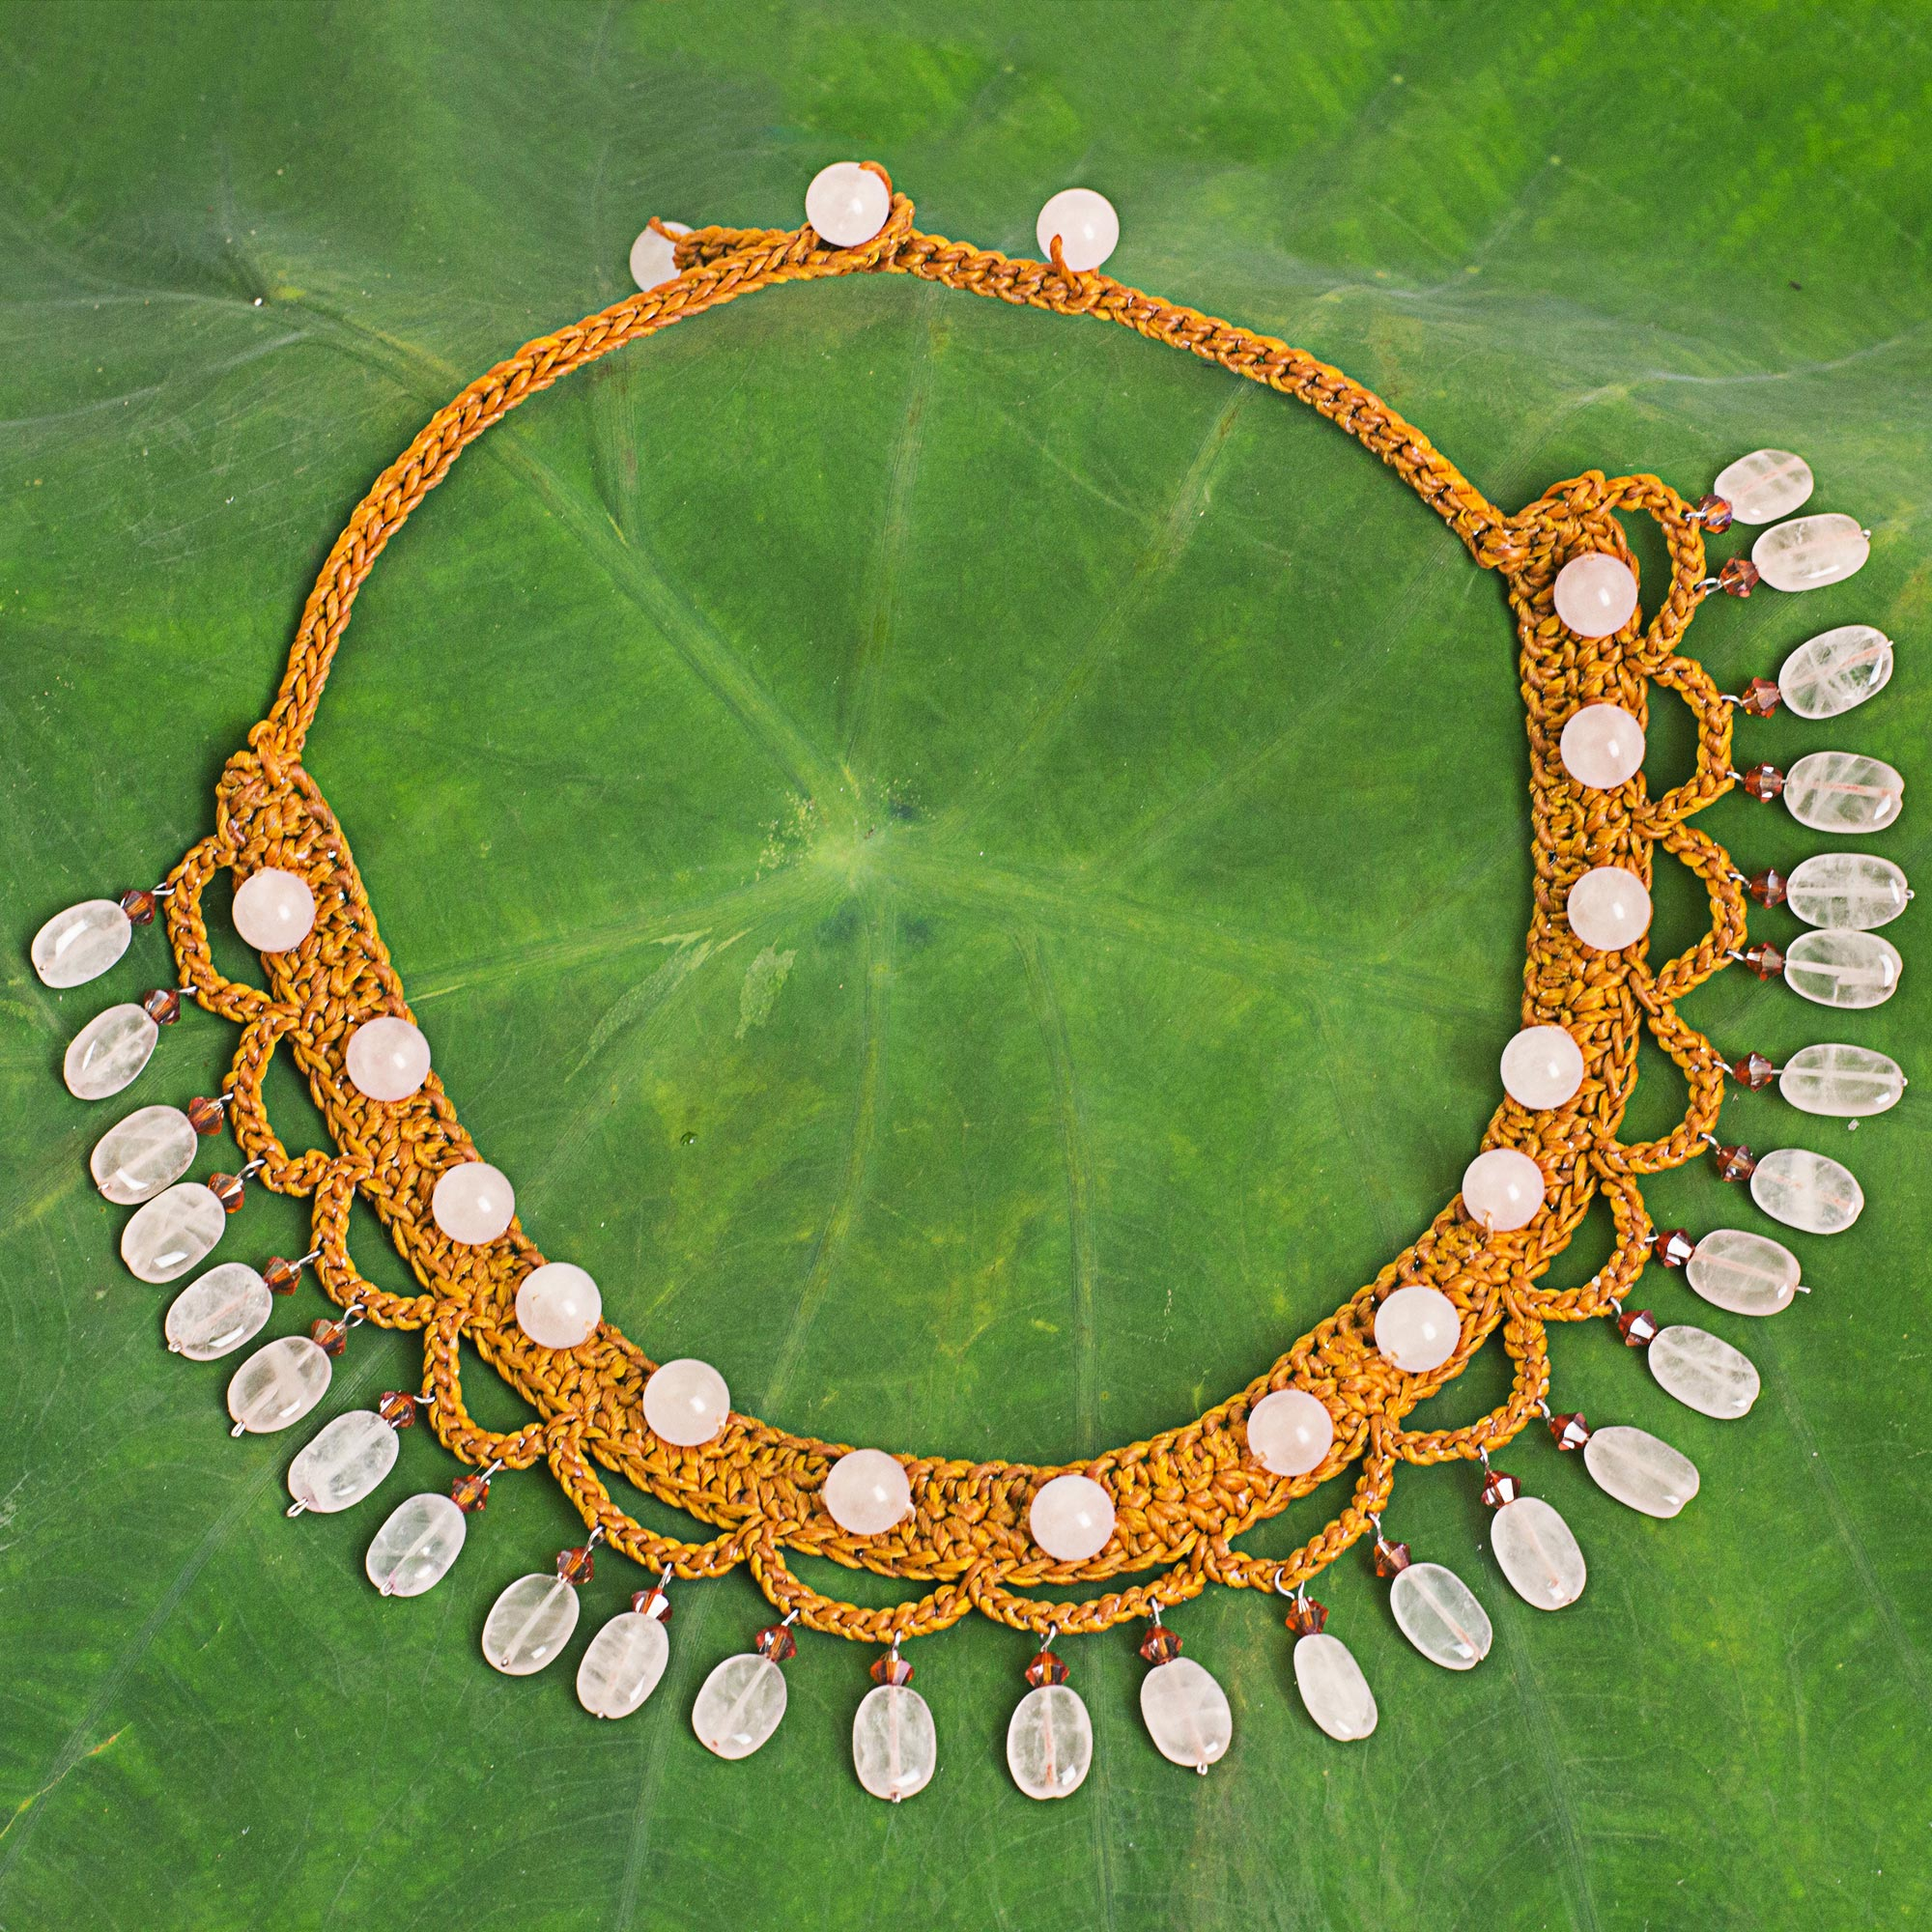 Handmade Thailand Ring Pink Bead Stone craft woven FAIRTRADE Jewelry Adjustable 